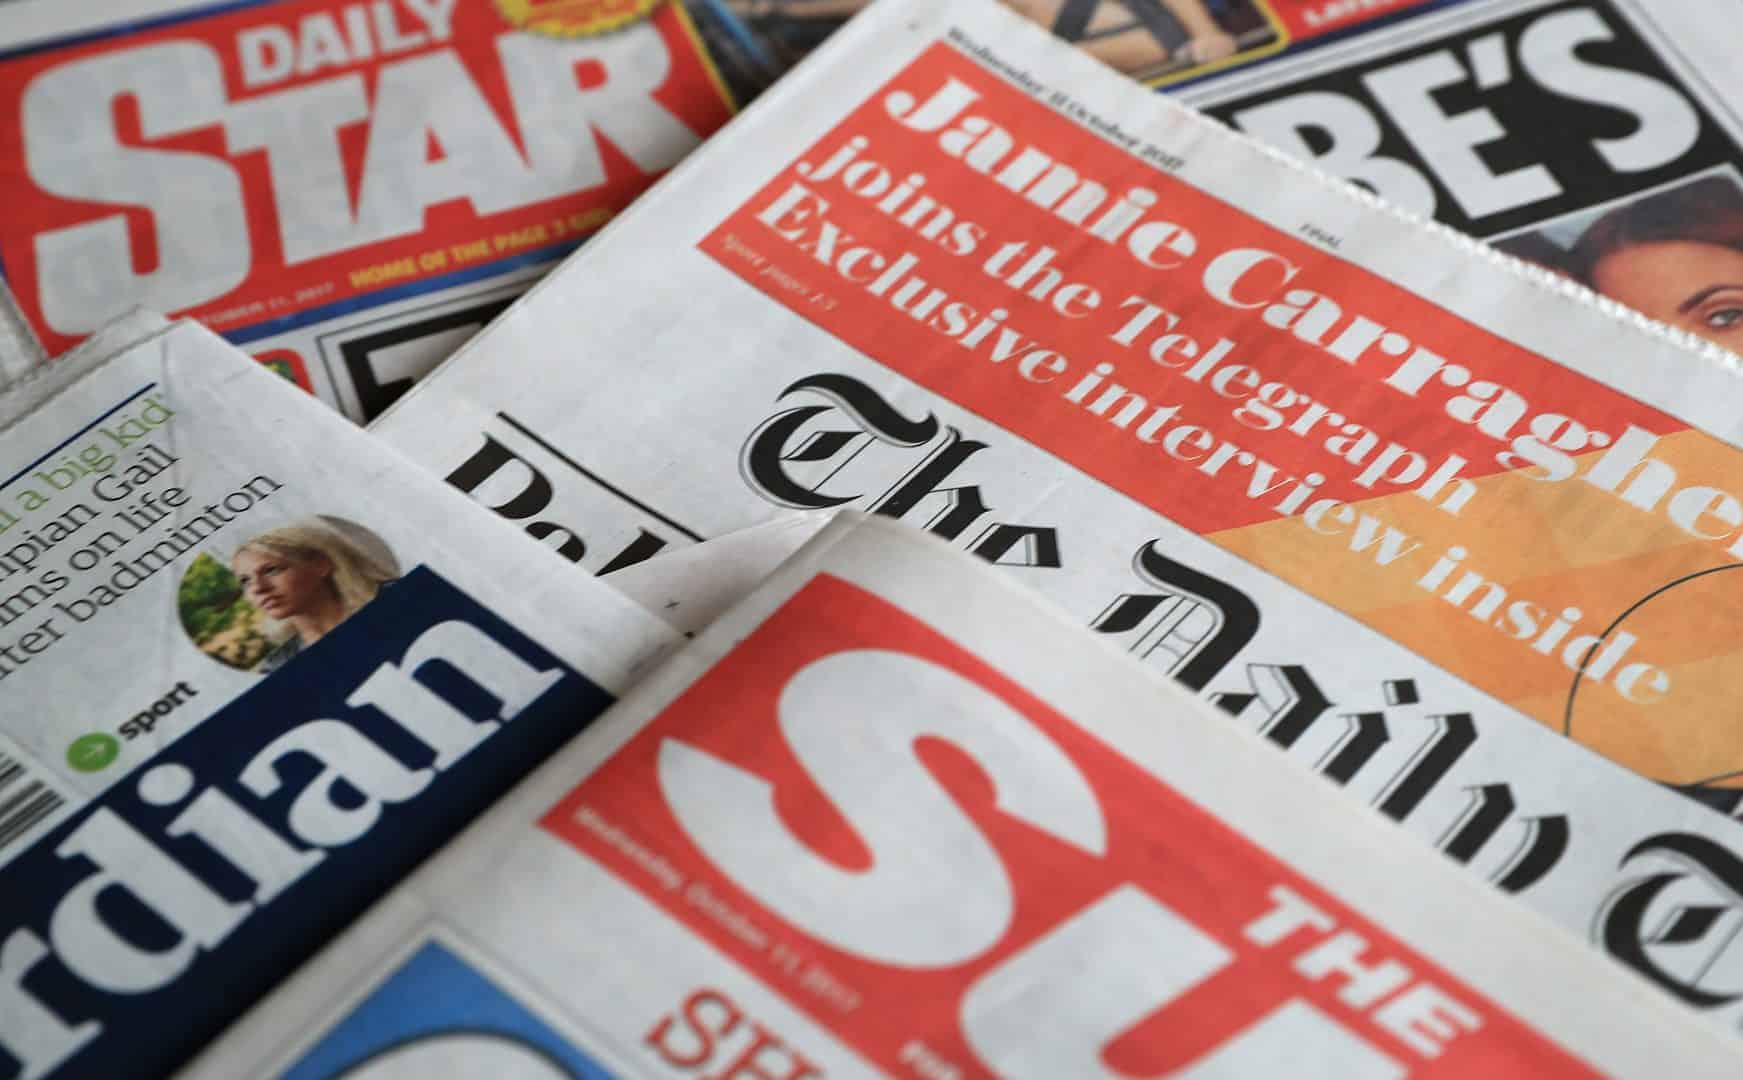 Mail on Sunday celebrates Johnson’s scheduled return as criticism mounts